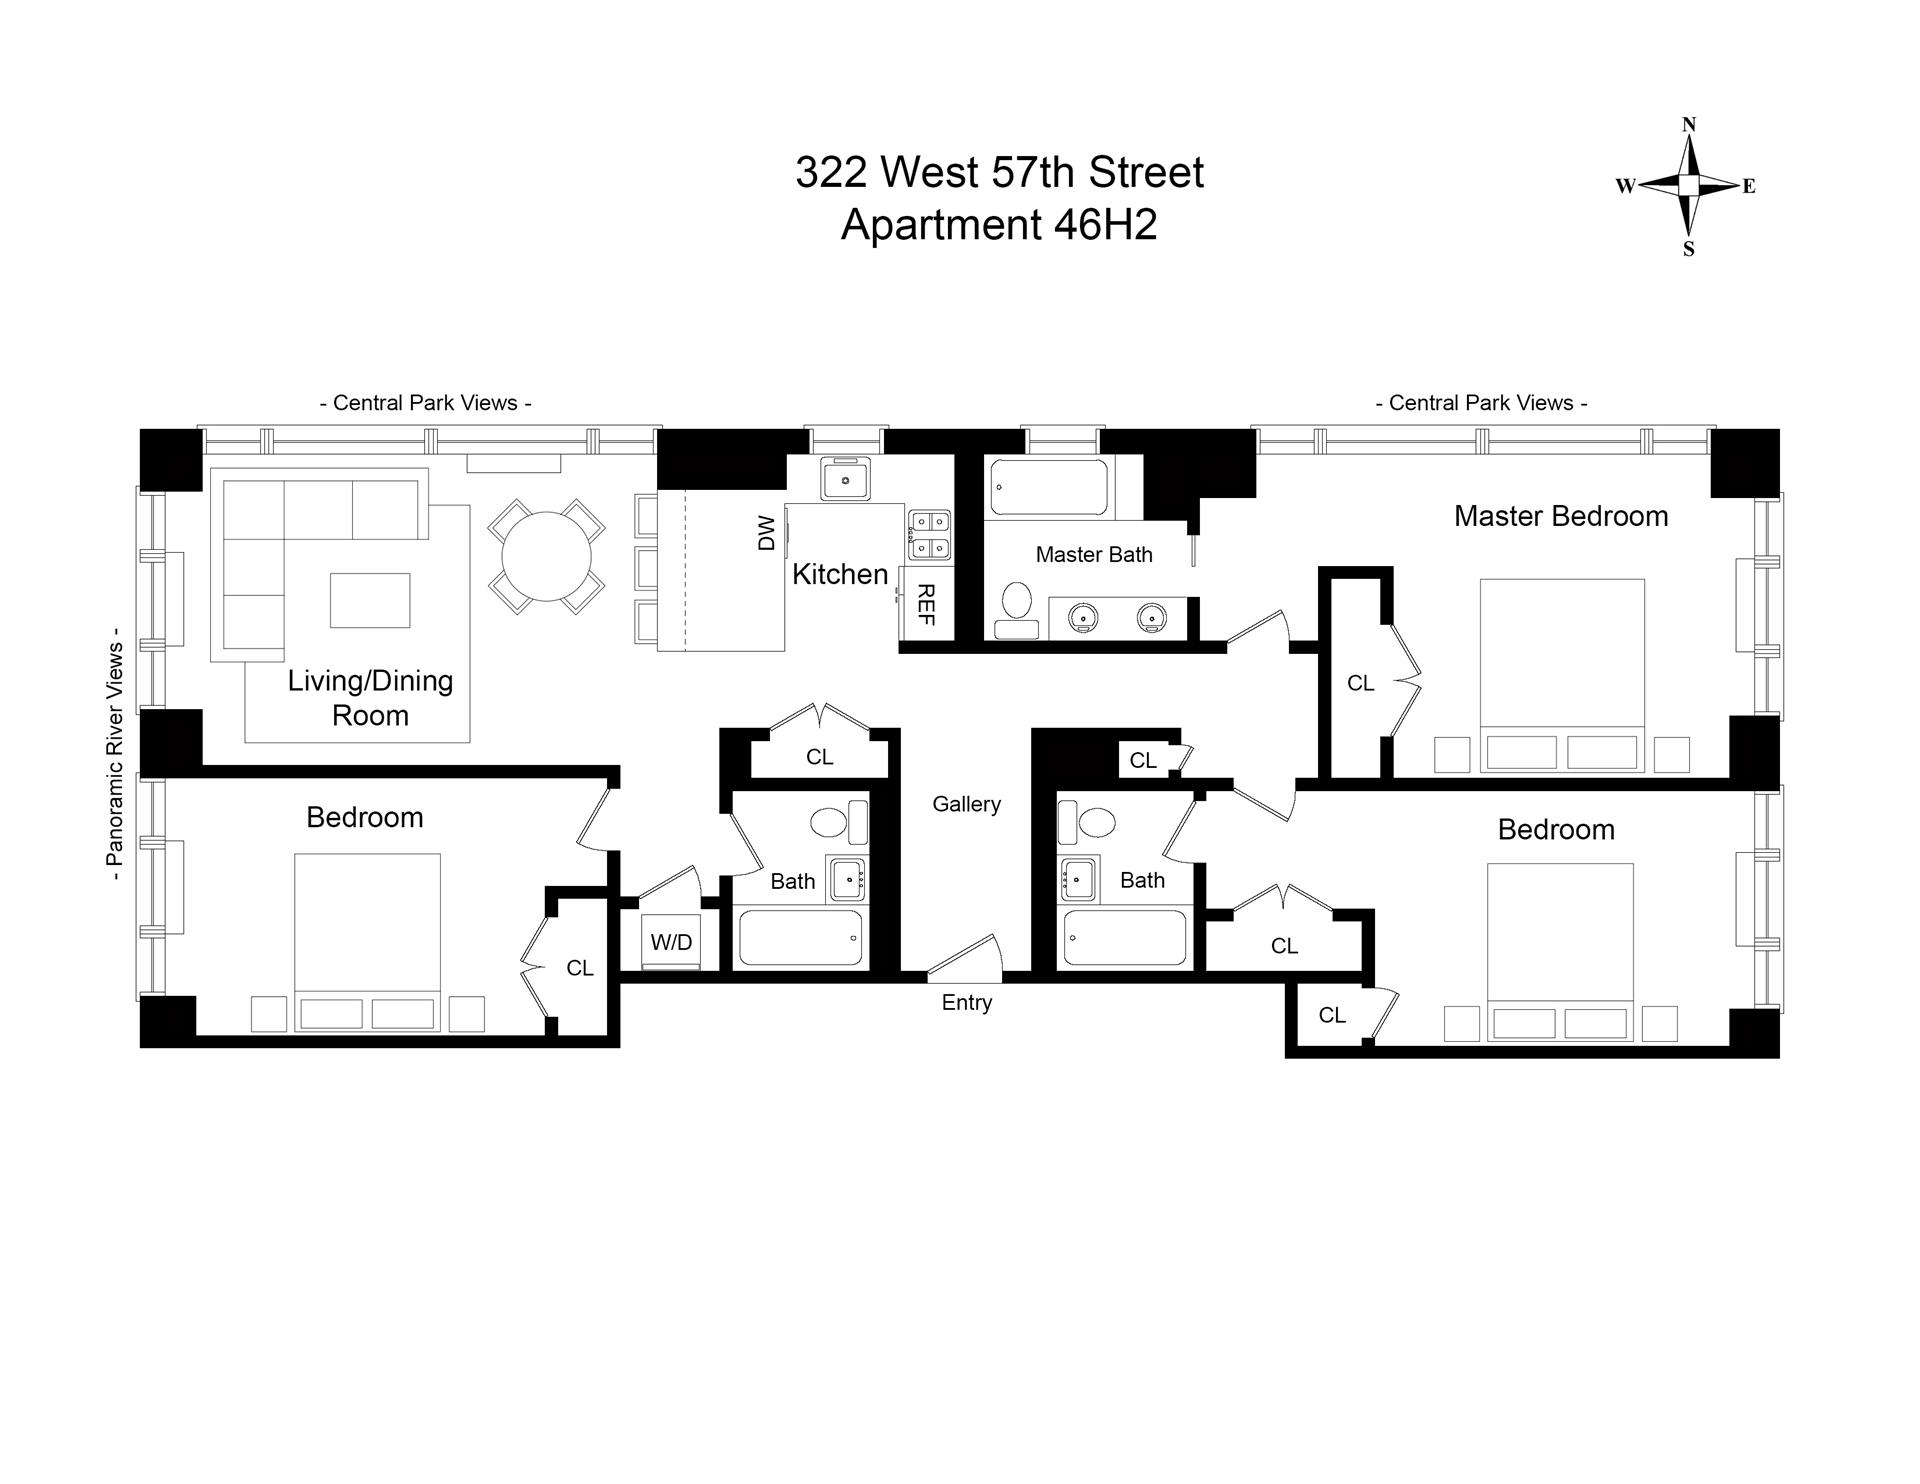 Floorplan for 322 West 57th Street, 46H2